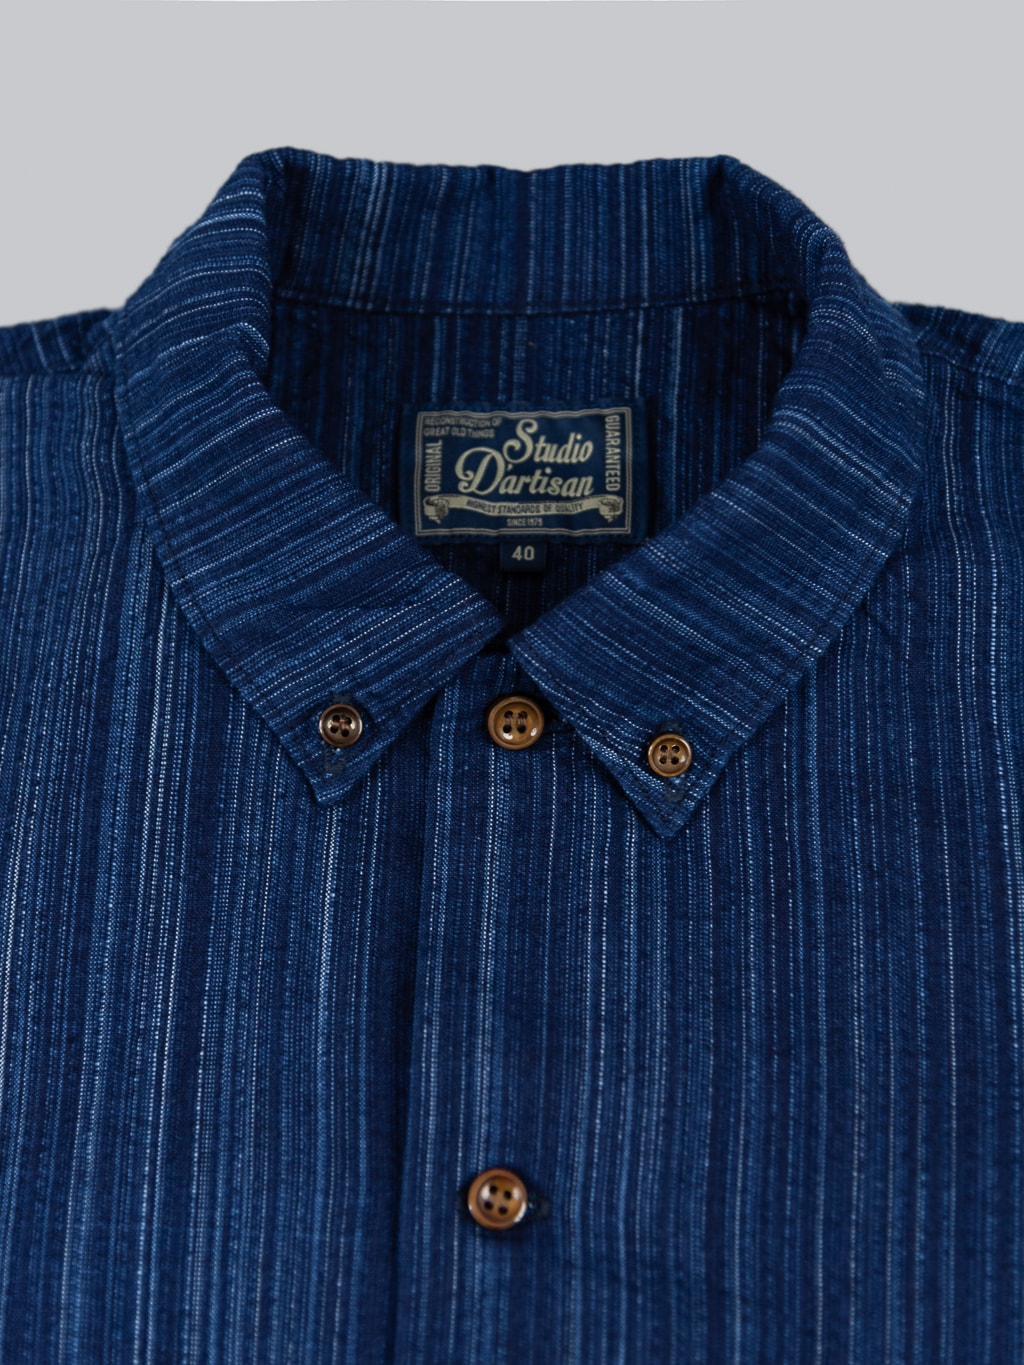 Studio DArtisan indigo shijira kasuri short sleeve shirt collar buttons